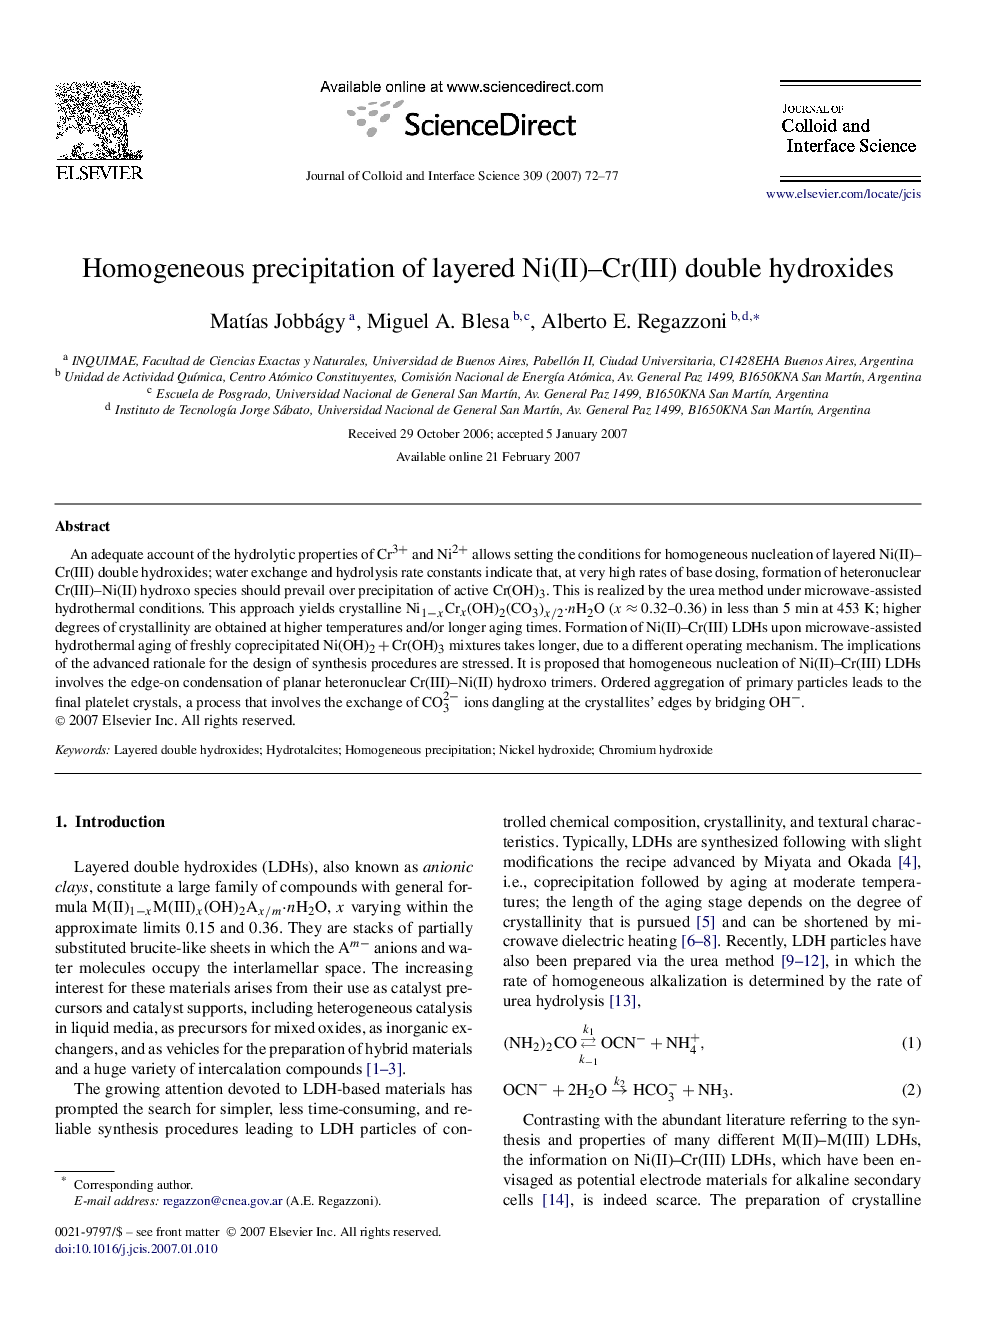 Homogeneous precipitation of layered Ni(II)–Cr(III) double hydroxides